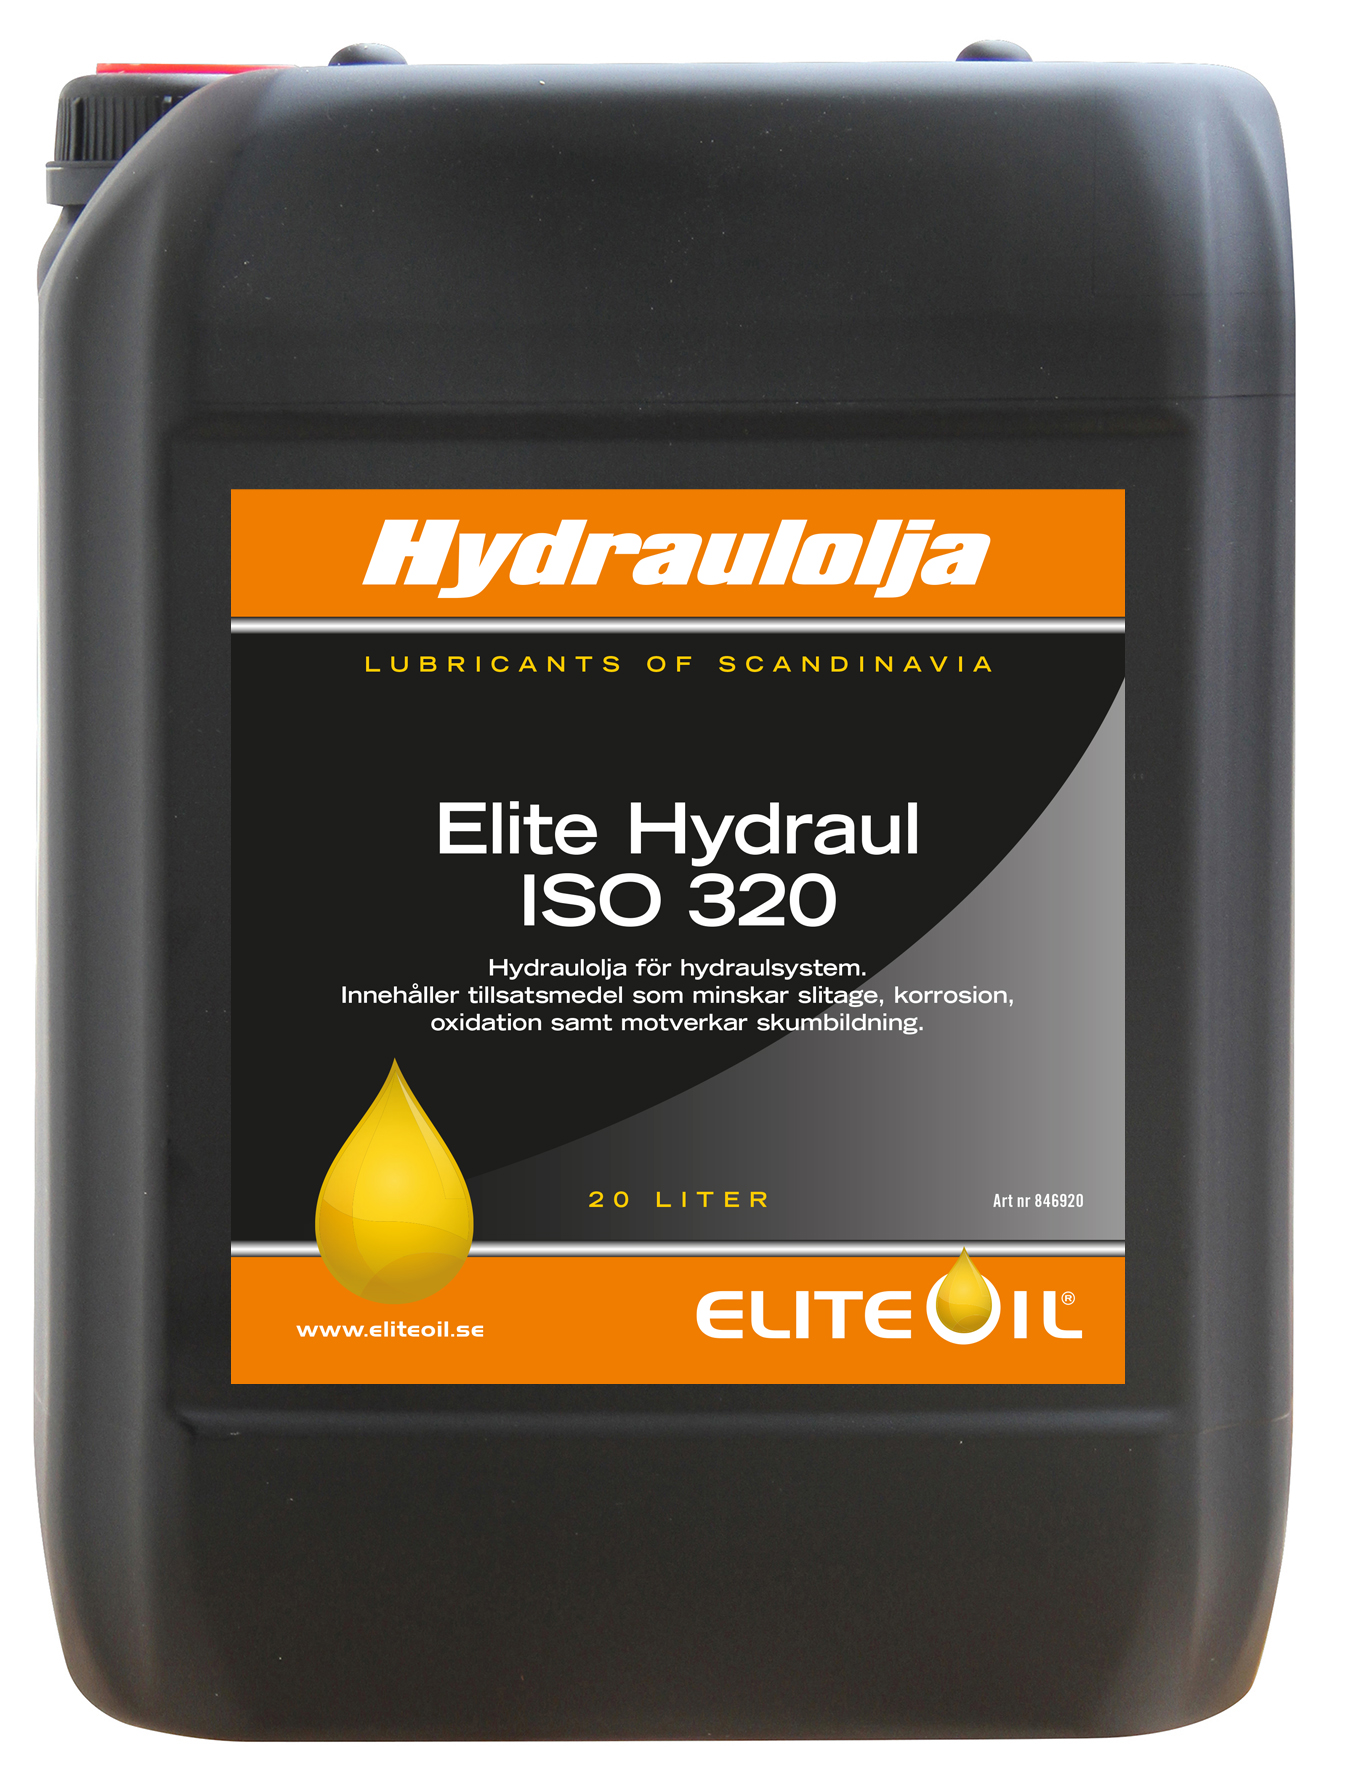 Elite Hydraul ISO 320, 20 liter dunk-image